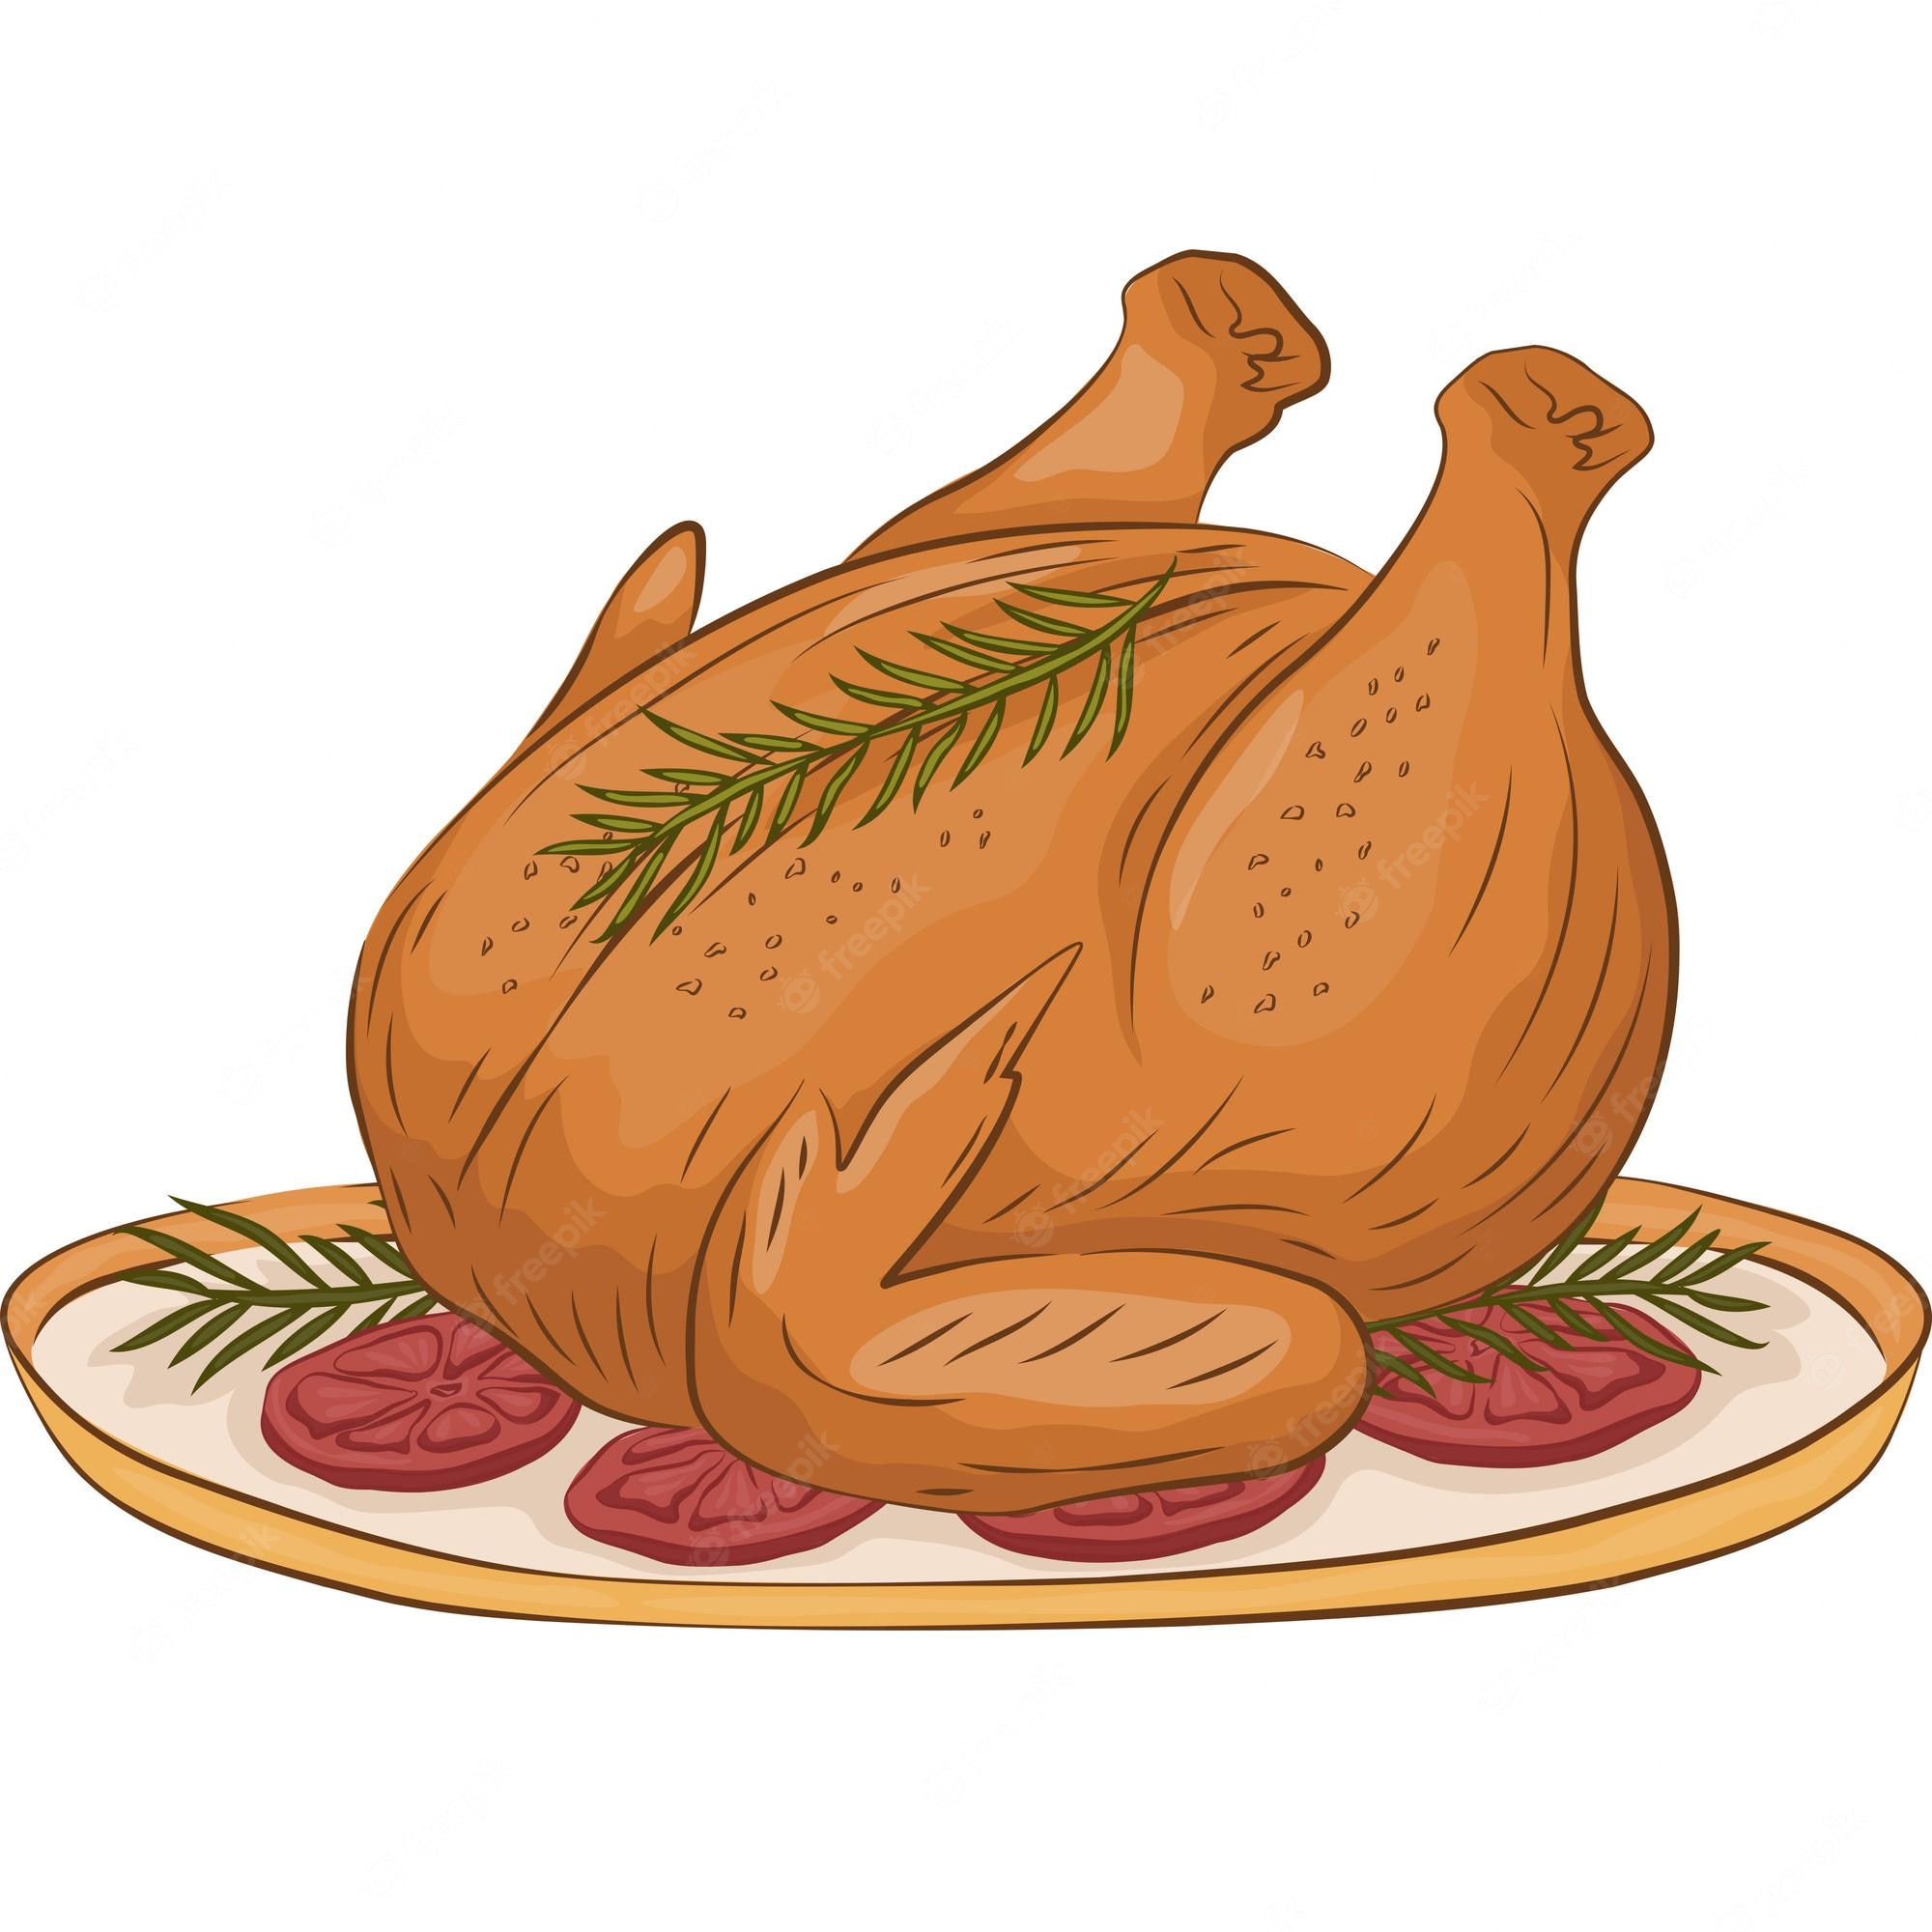 Free turkeys christmas, Download Free turkeys christmas png images ...